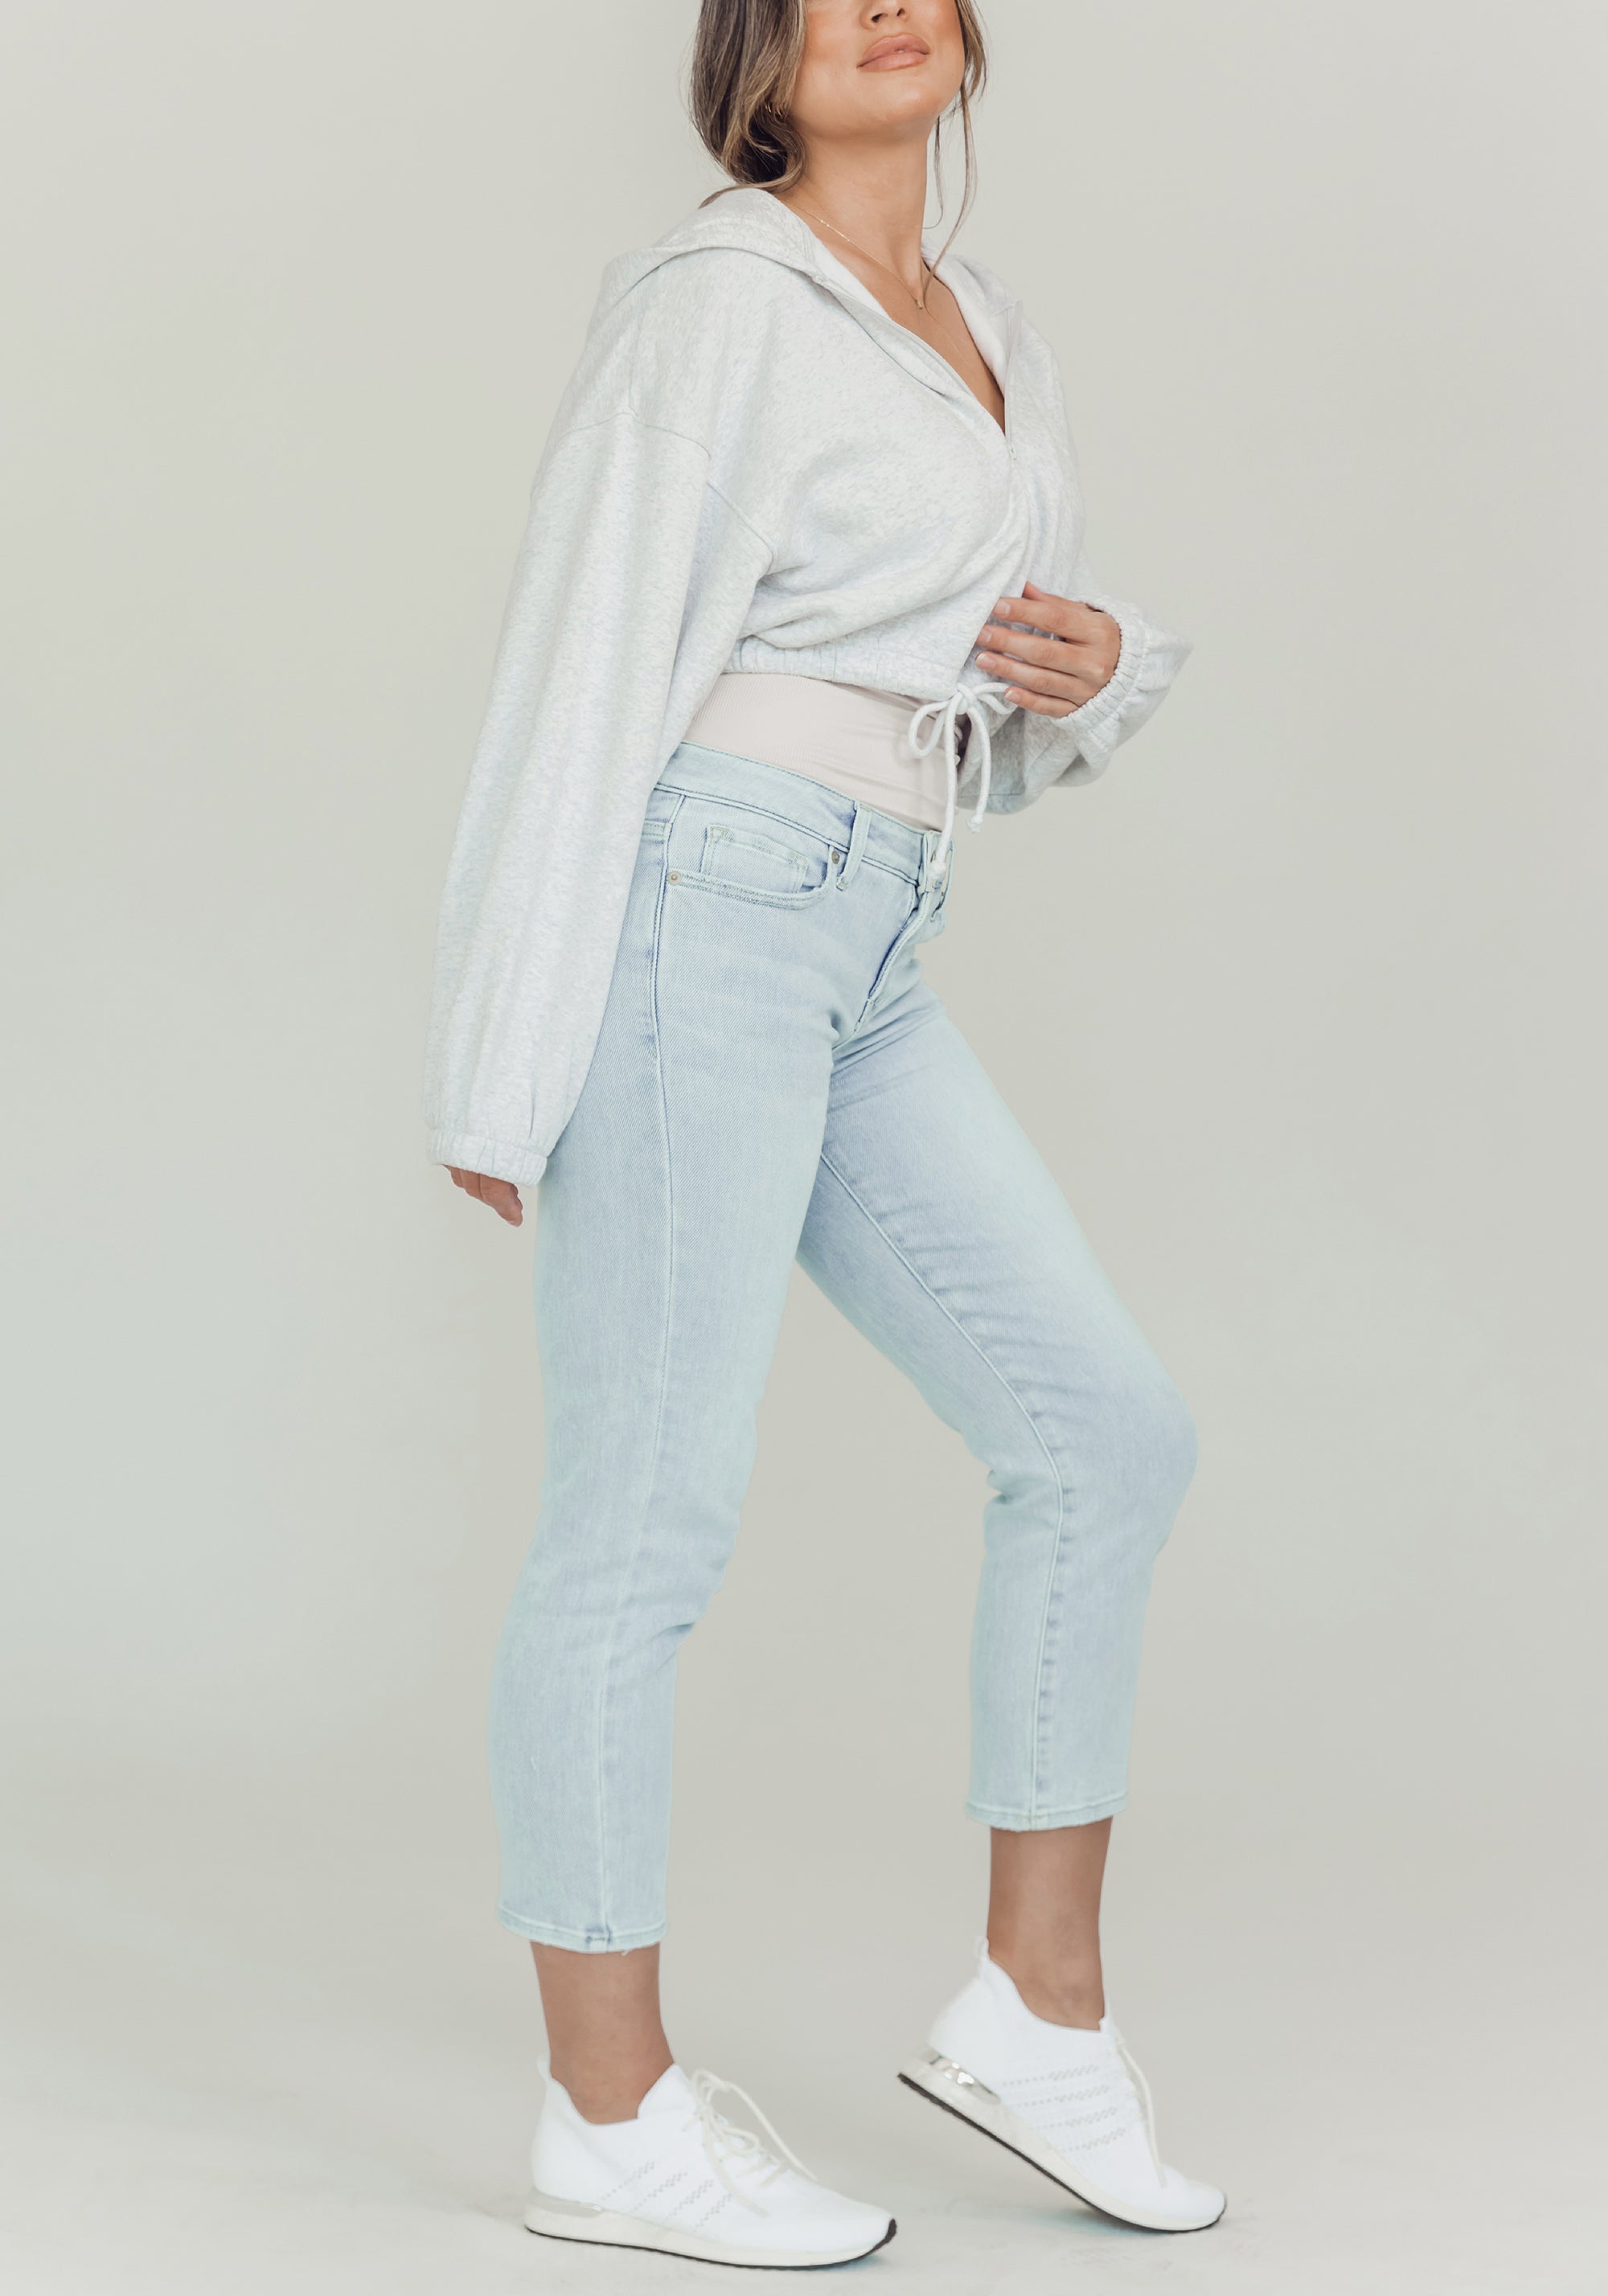 BLANQI Postpartum Support Skinny Jeans - Smoke Wash